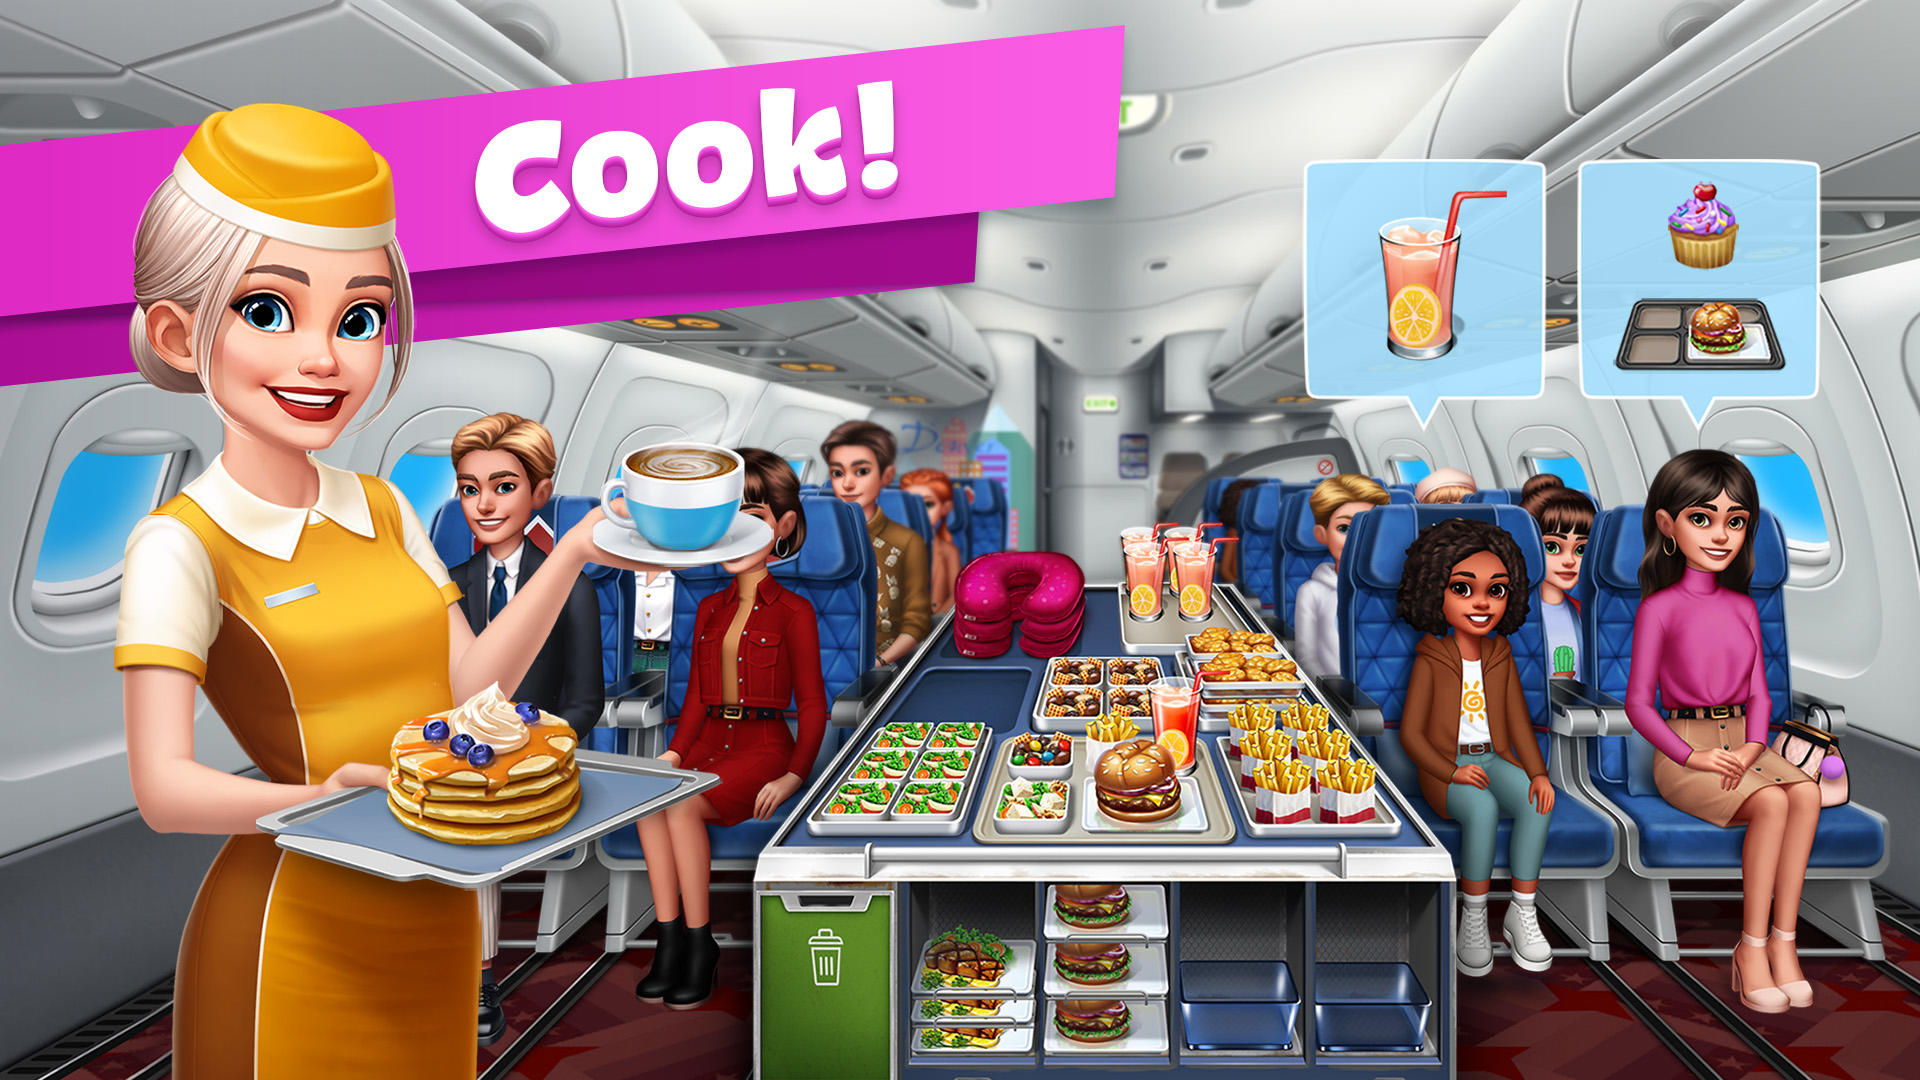 Screenshot 1 of हवाई जहाज रसोइये - खाना पकाने का खेल 9.1.1